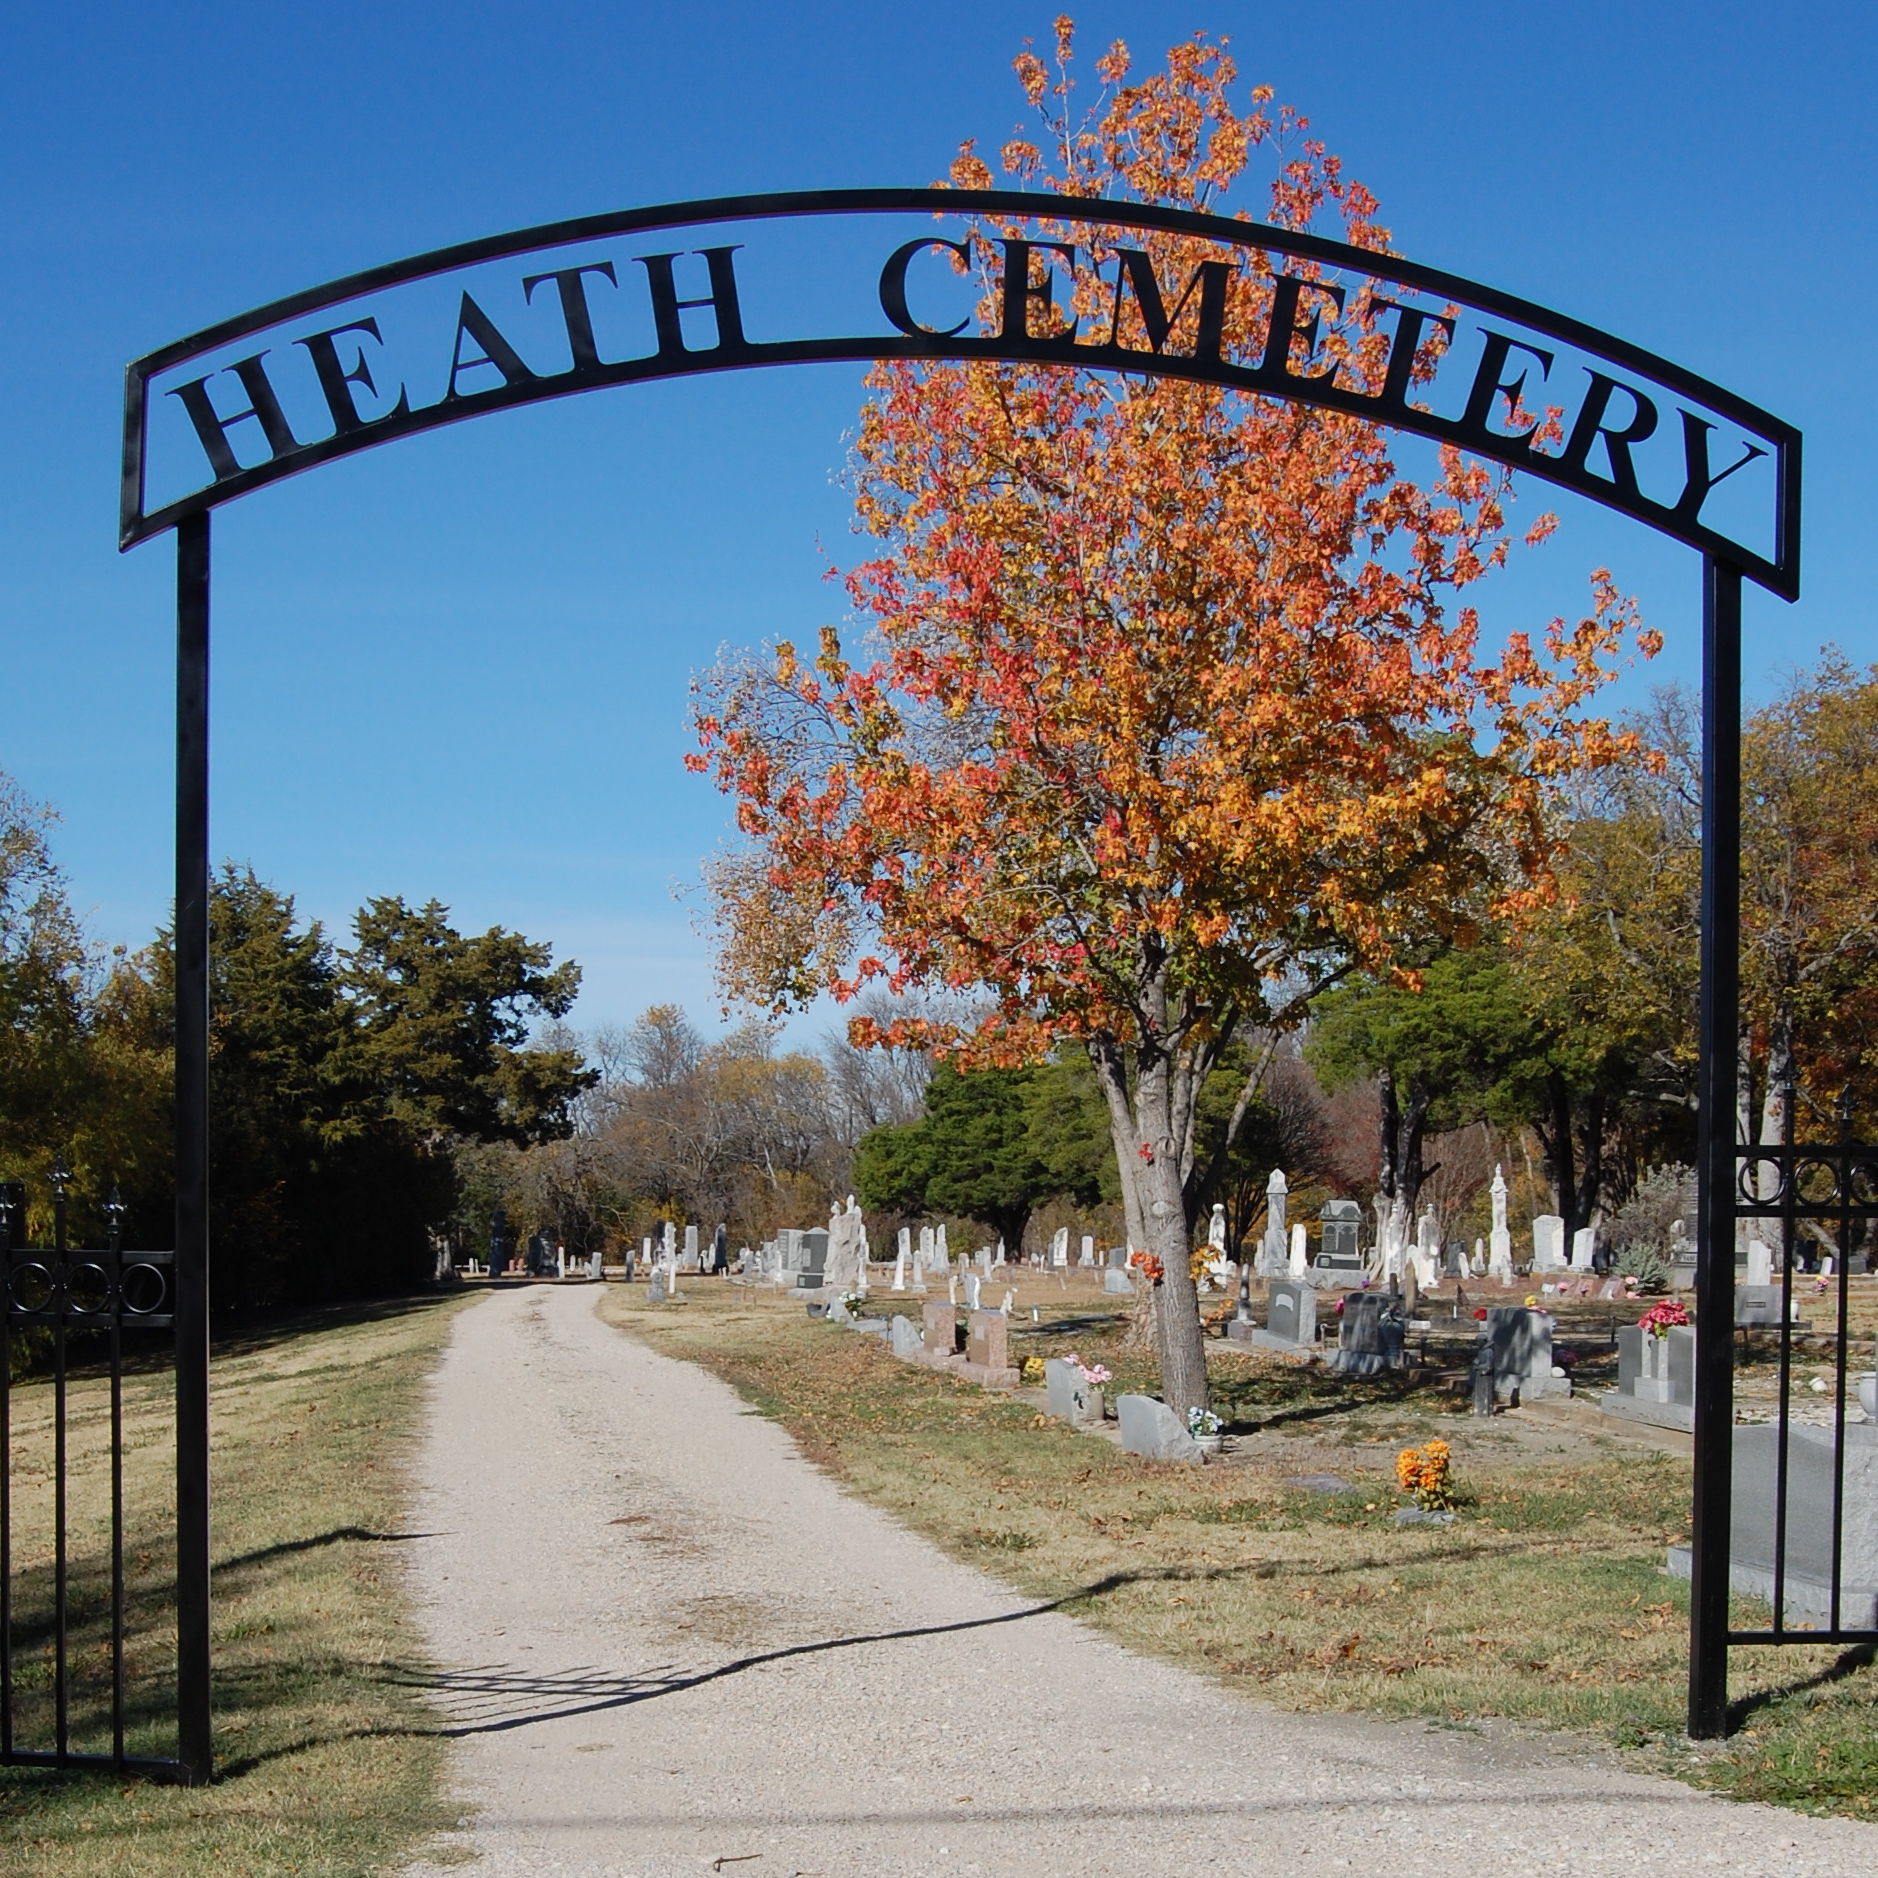 Photo of the entrance of the Heath Cemetery in Heath Texas